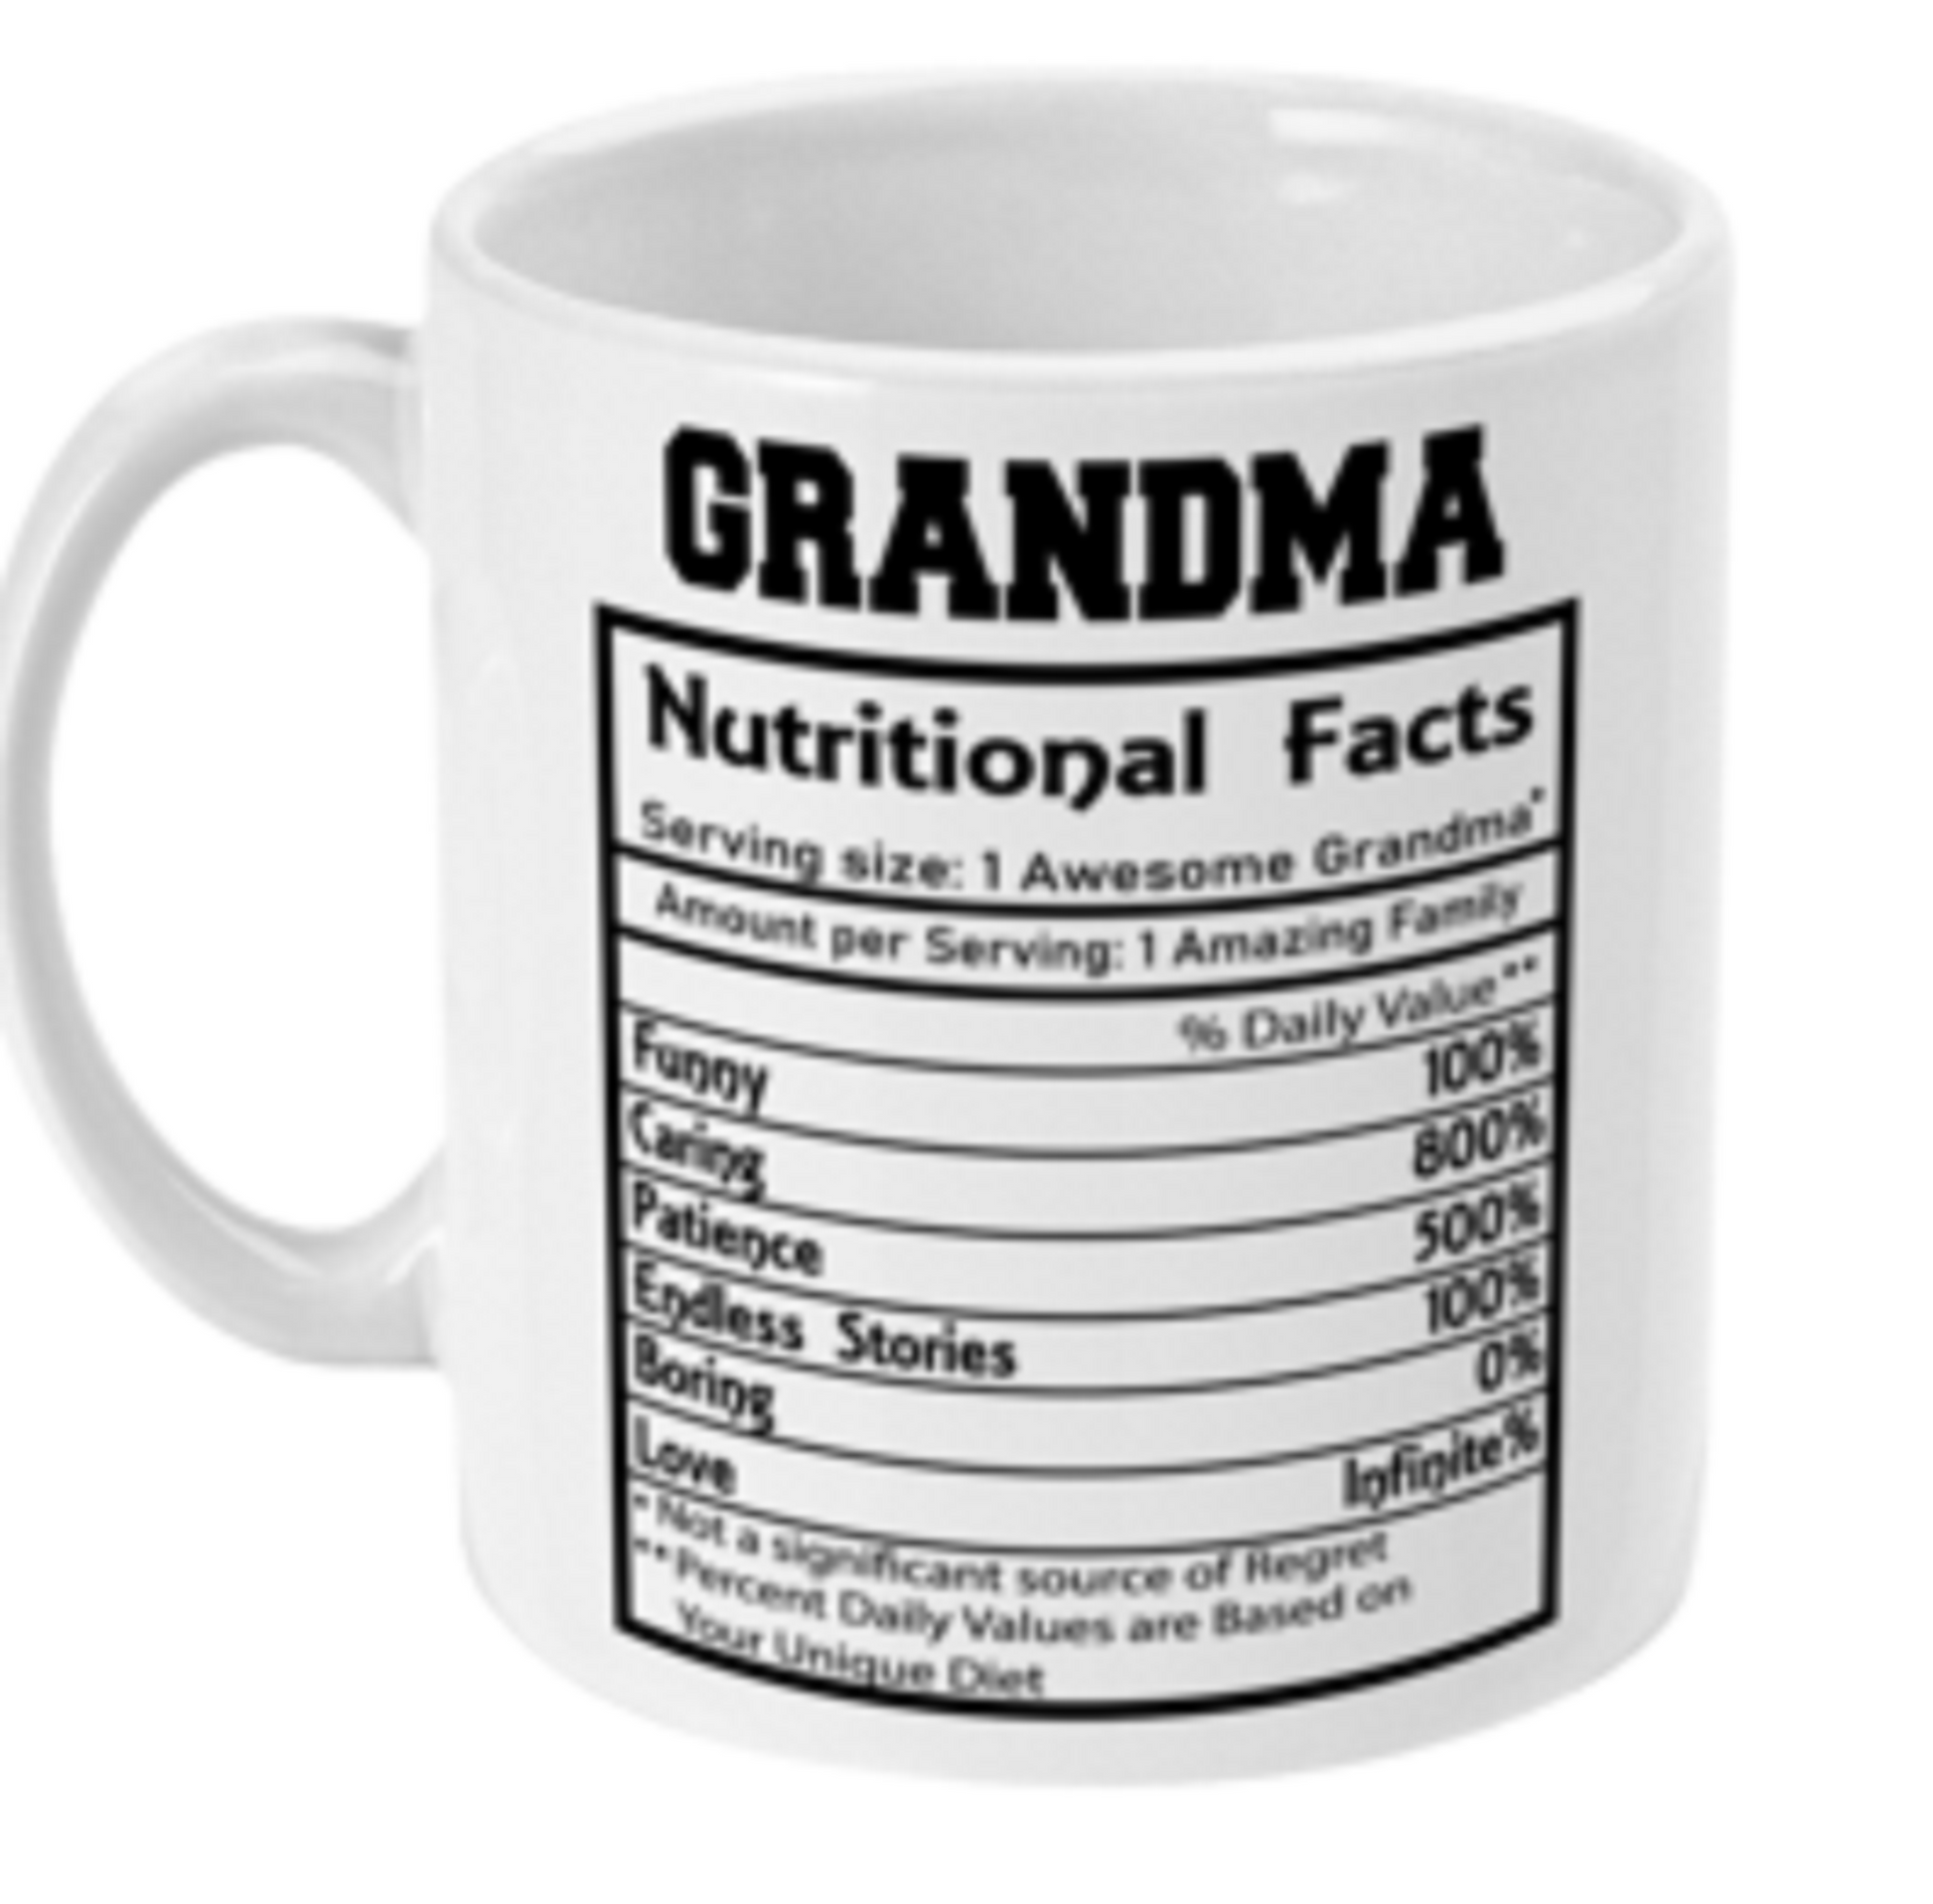  Grandma Nutritional Facts Coffee Mug by Free Spirit Accessories sold by Free Spirit Accessories